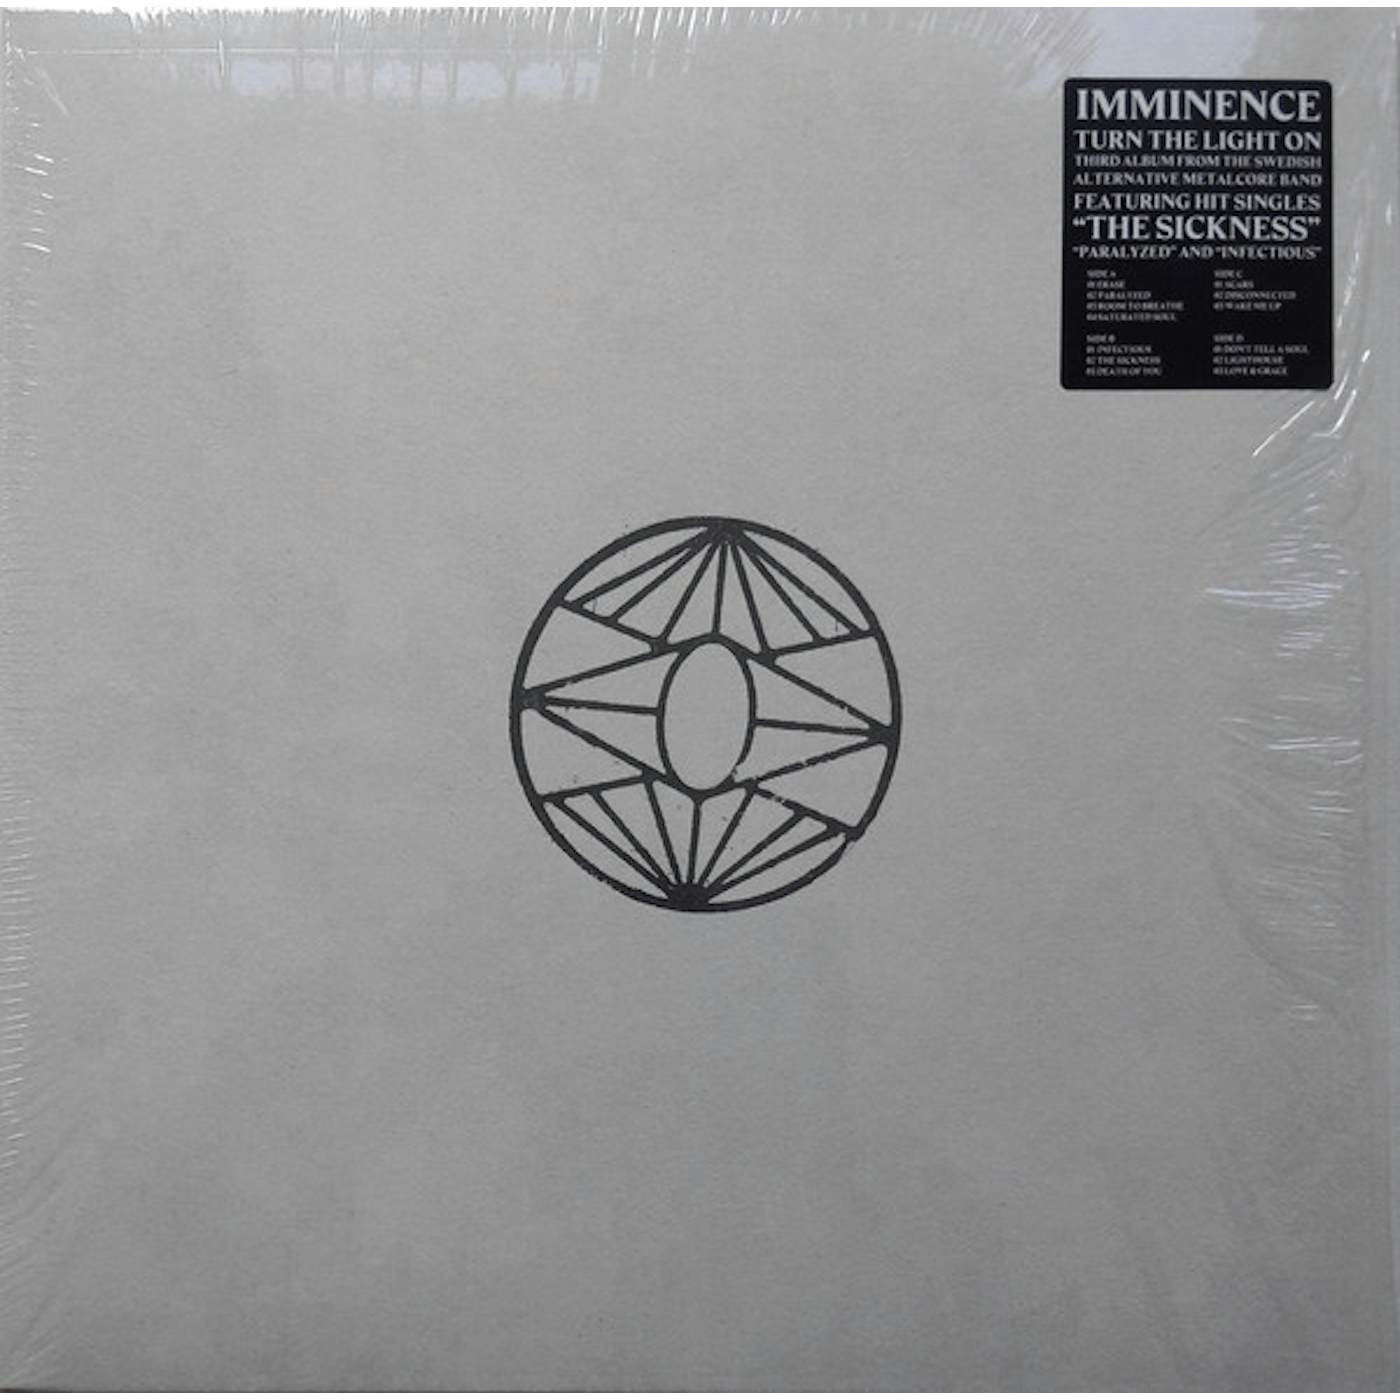 Imminence Turn the Light On Vinyl Record